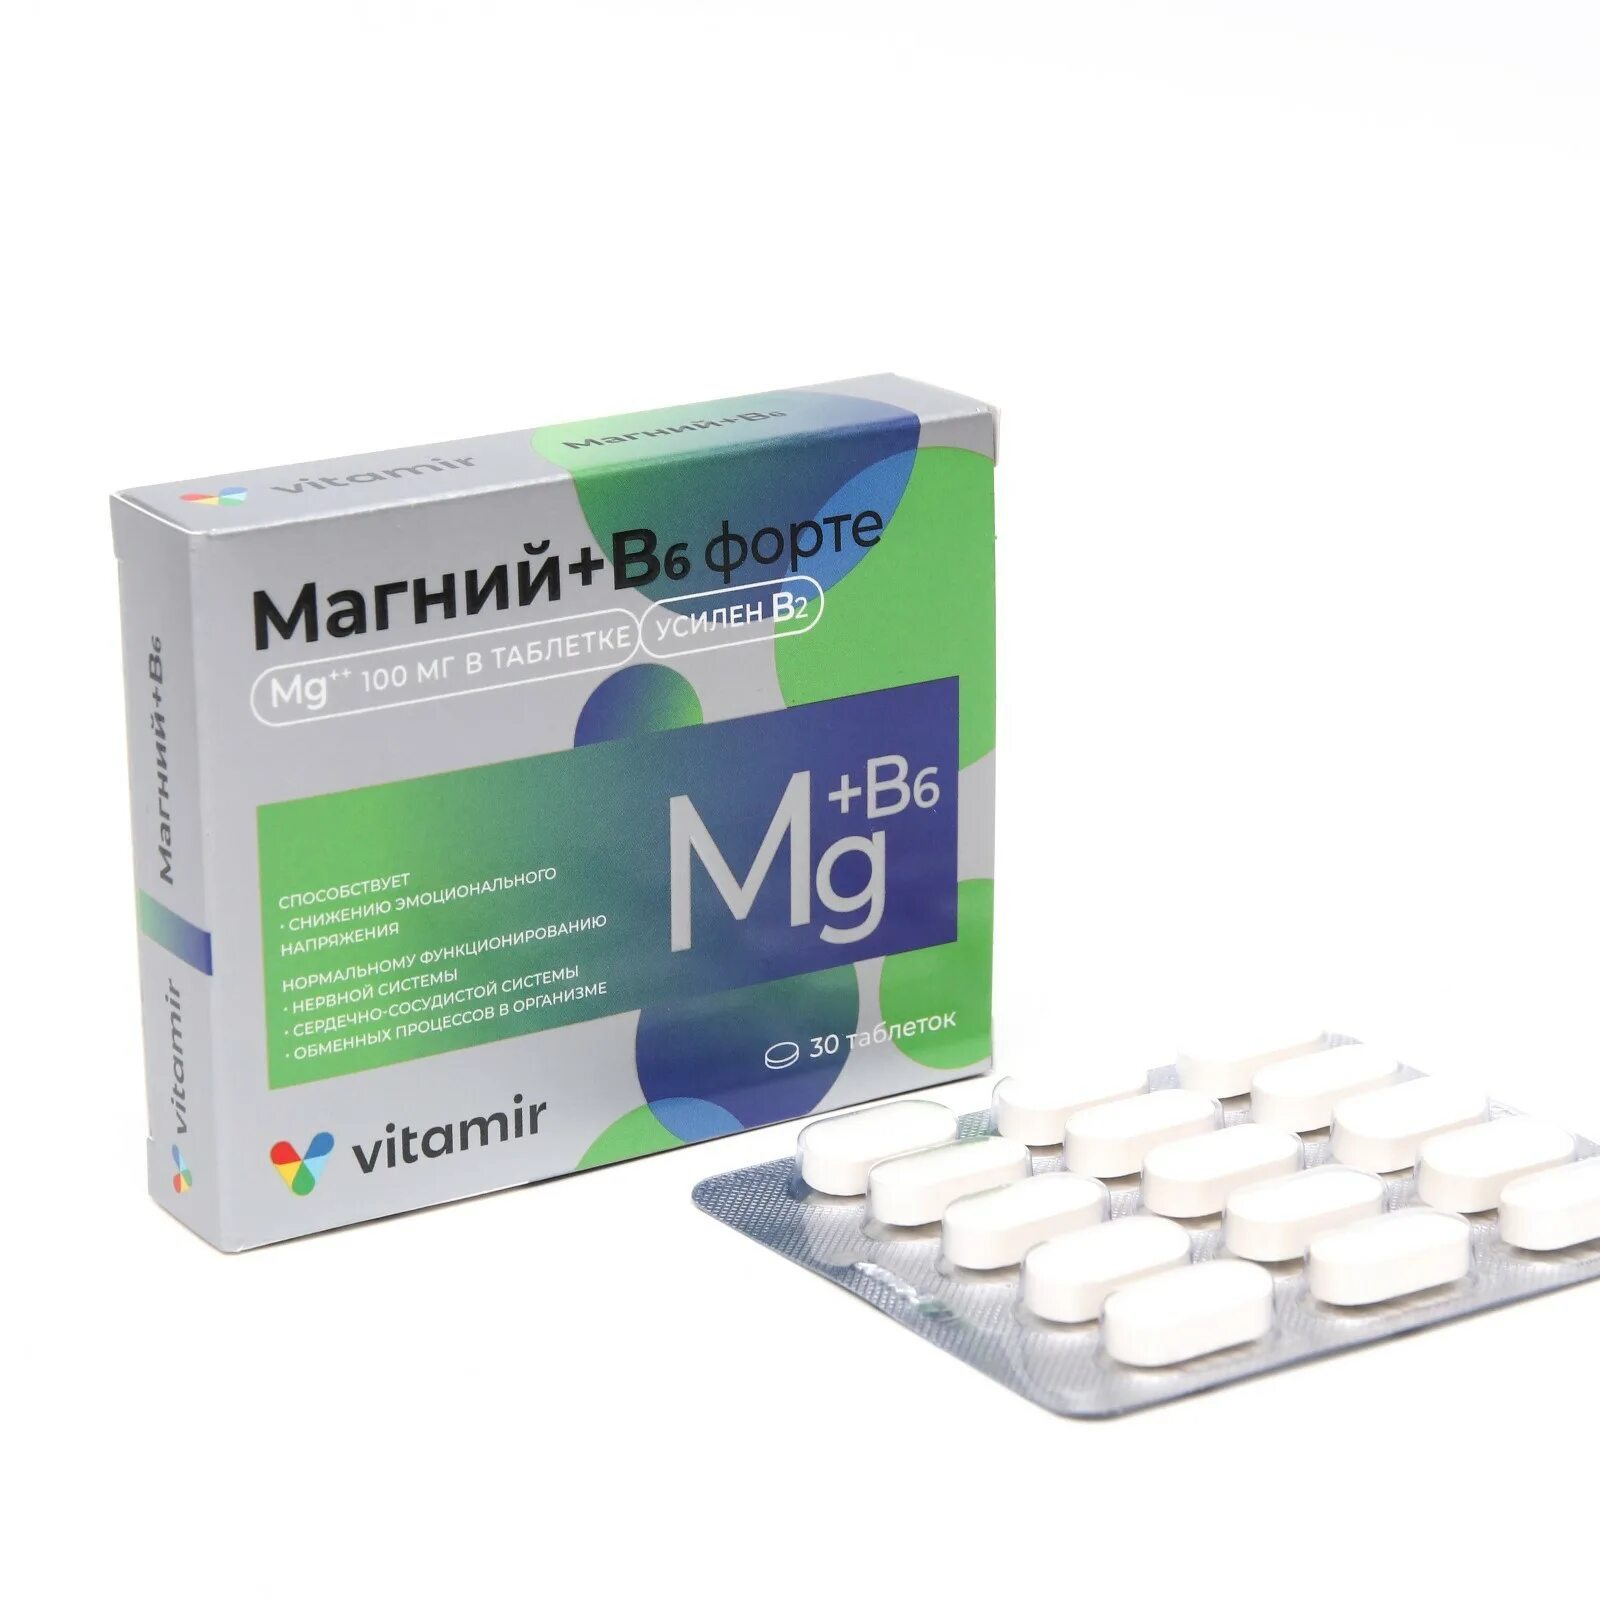 Magnesium b6 Forte. Магний б6 форте 100 мг. Магний форте в6 форте витамир. Магний б6 форте таблетки